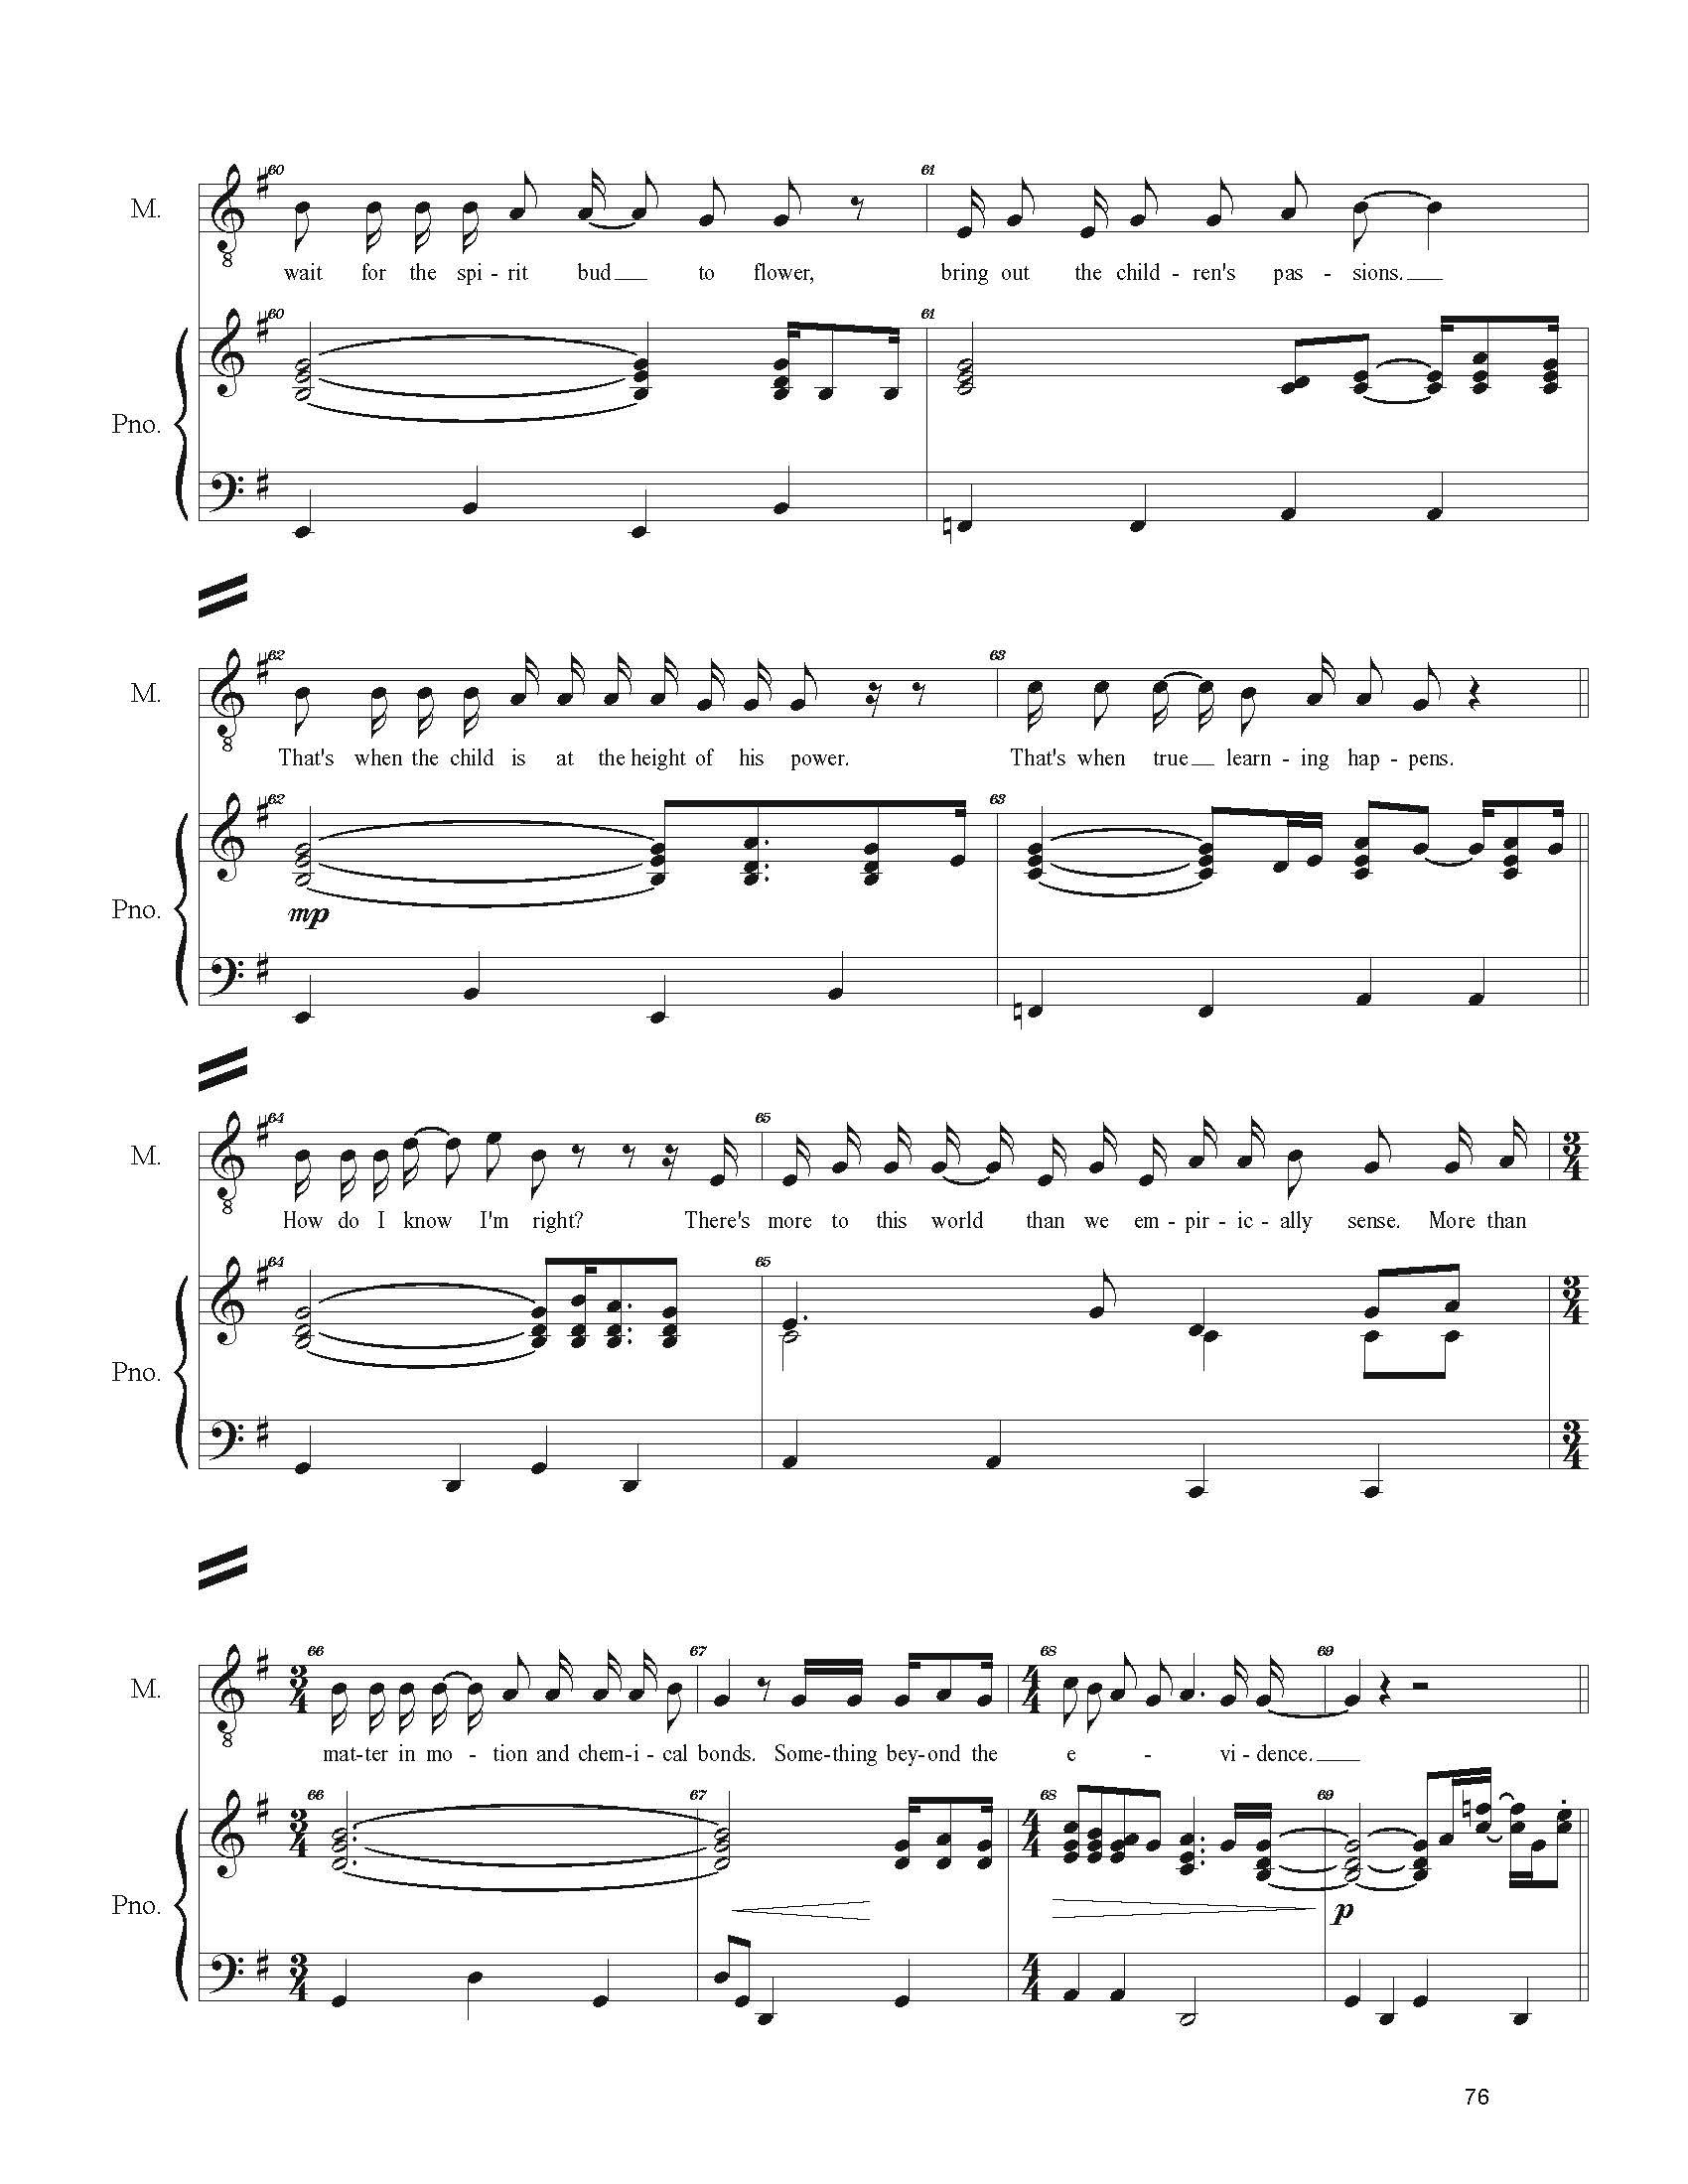 FULL PIANO VOCAL SCORE DRAFT 1 - Score_Page_076.jpg